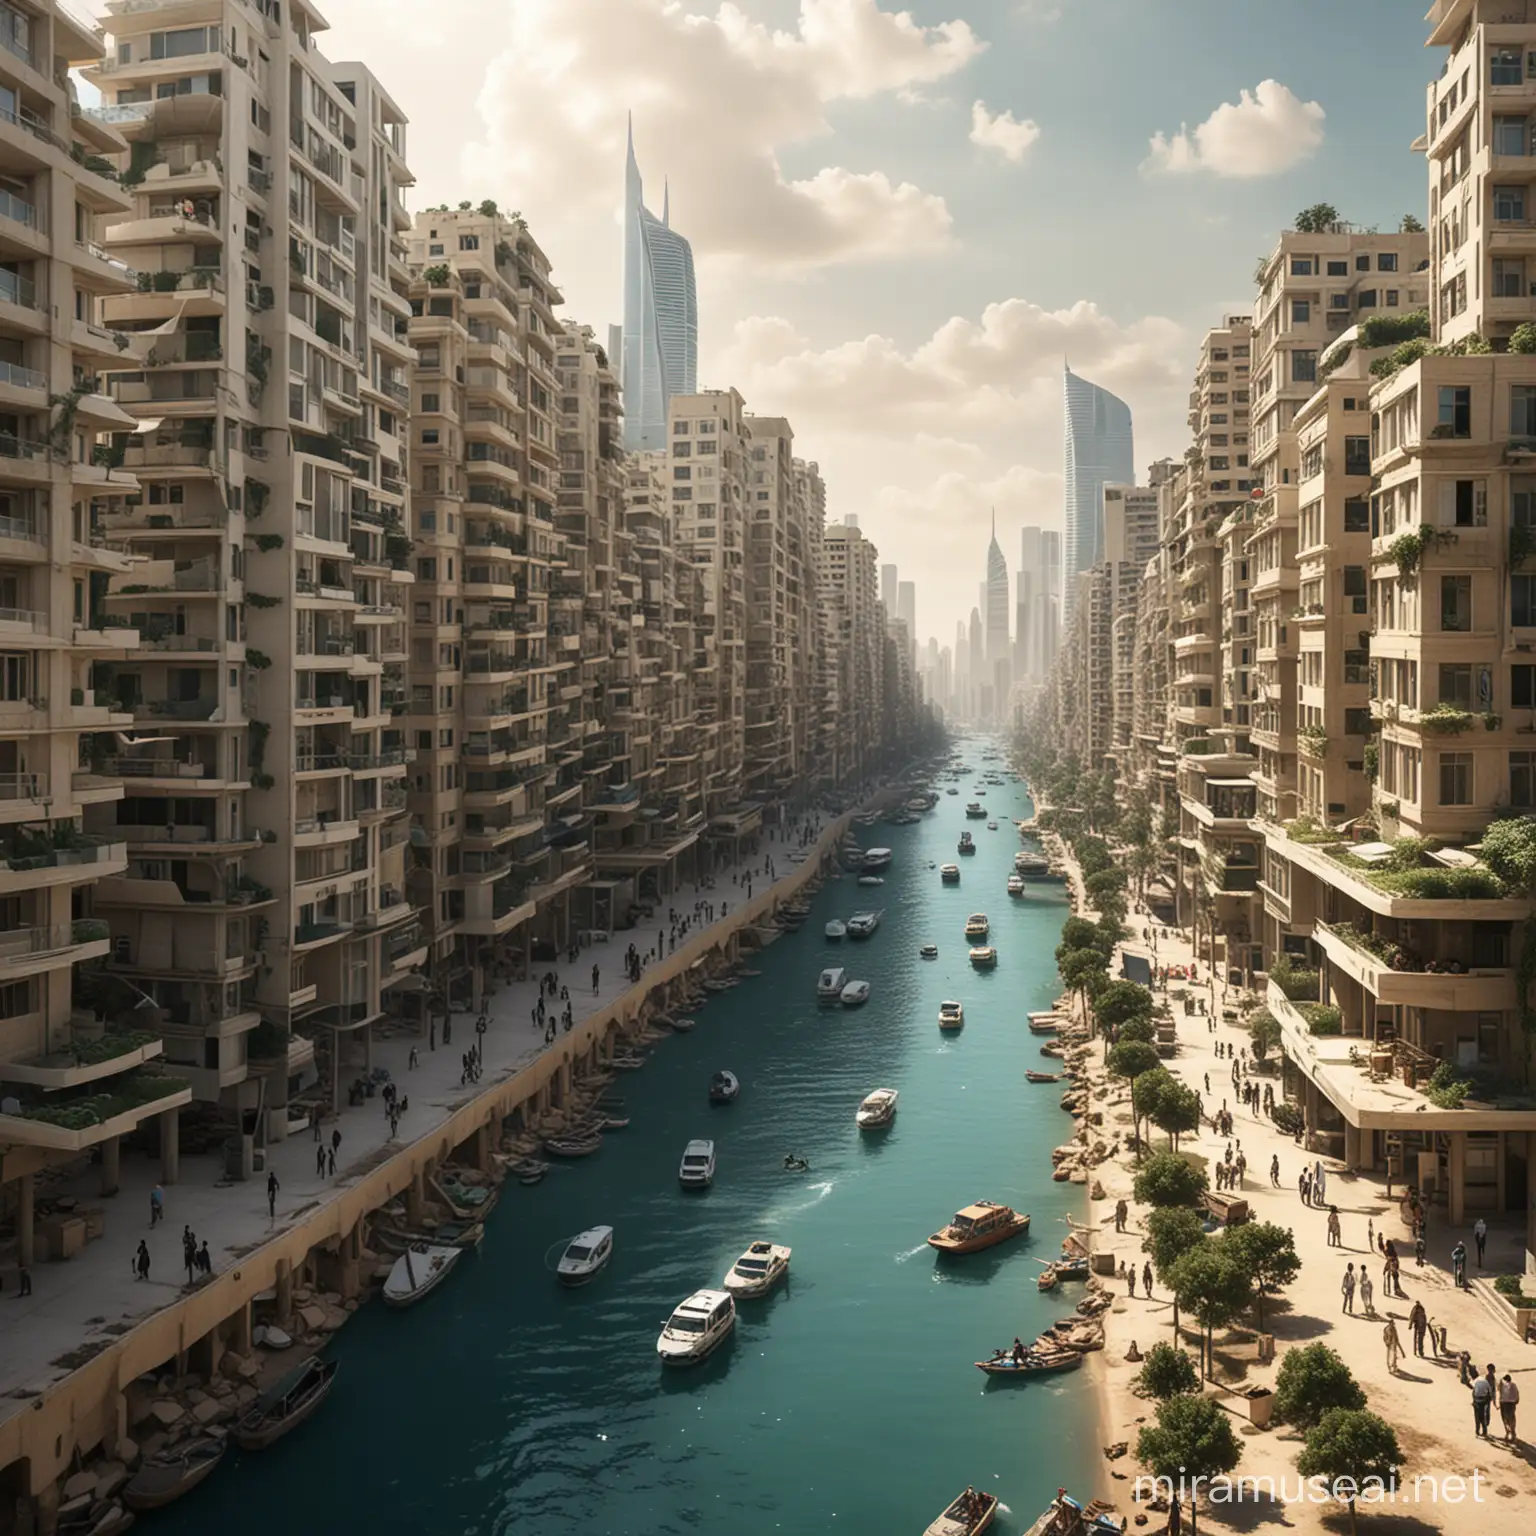 Beirut 2050